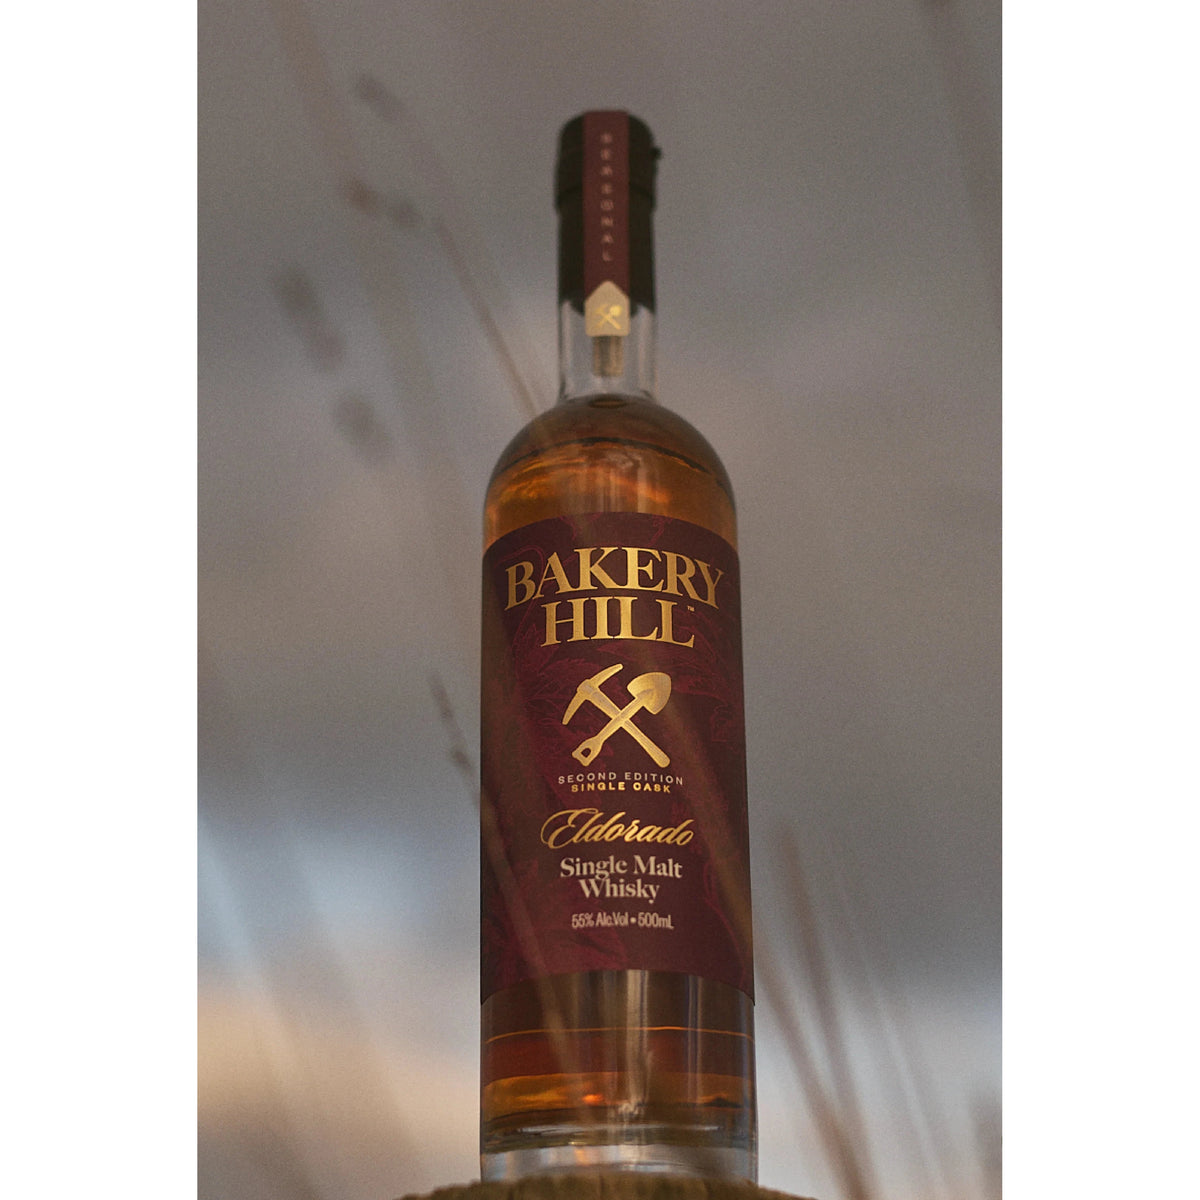 Bakery Hill Eldorado Second Edition Single Malt Whisky 500ml